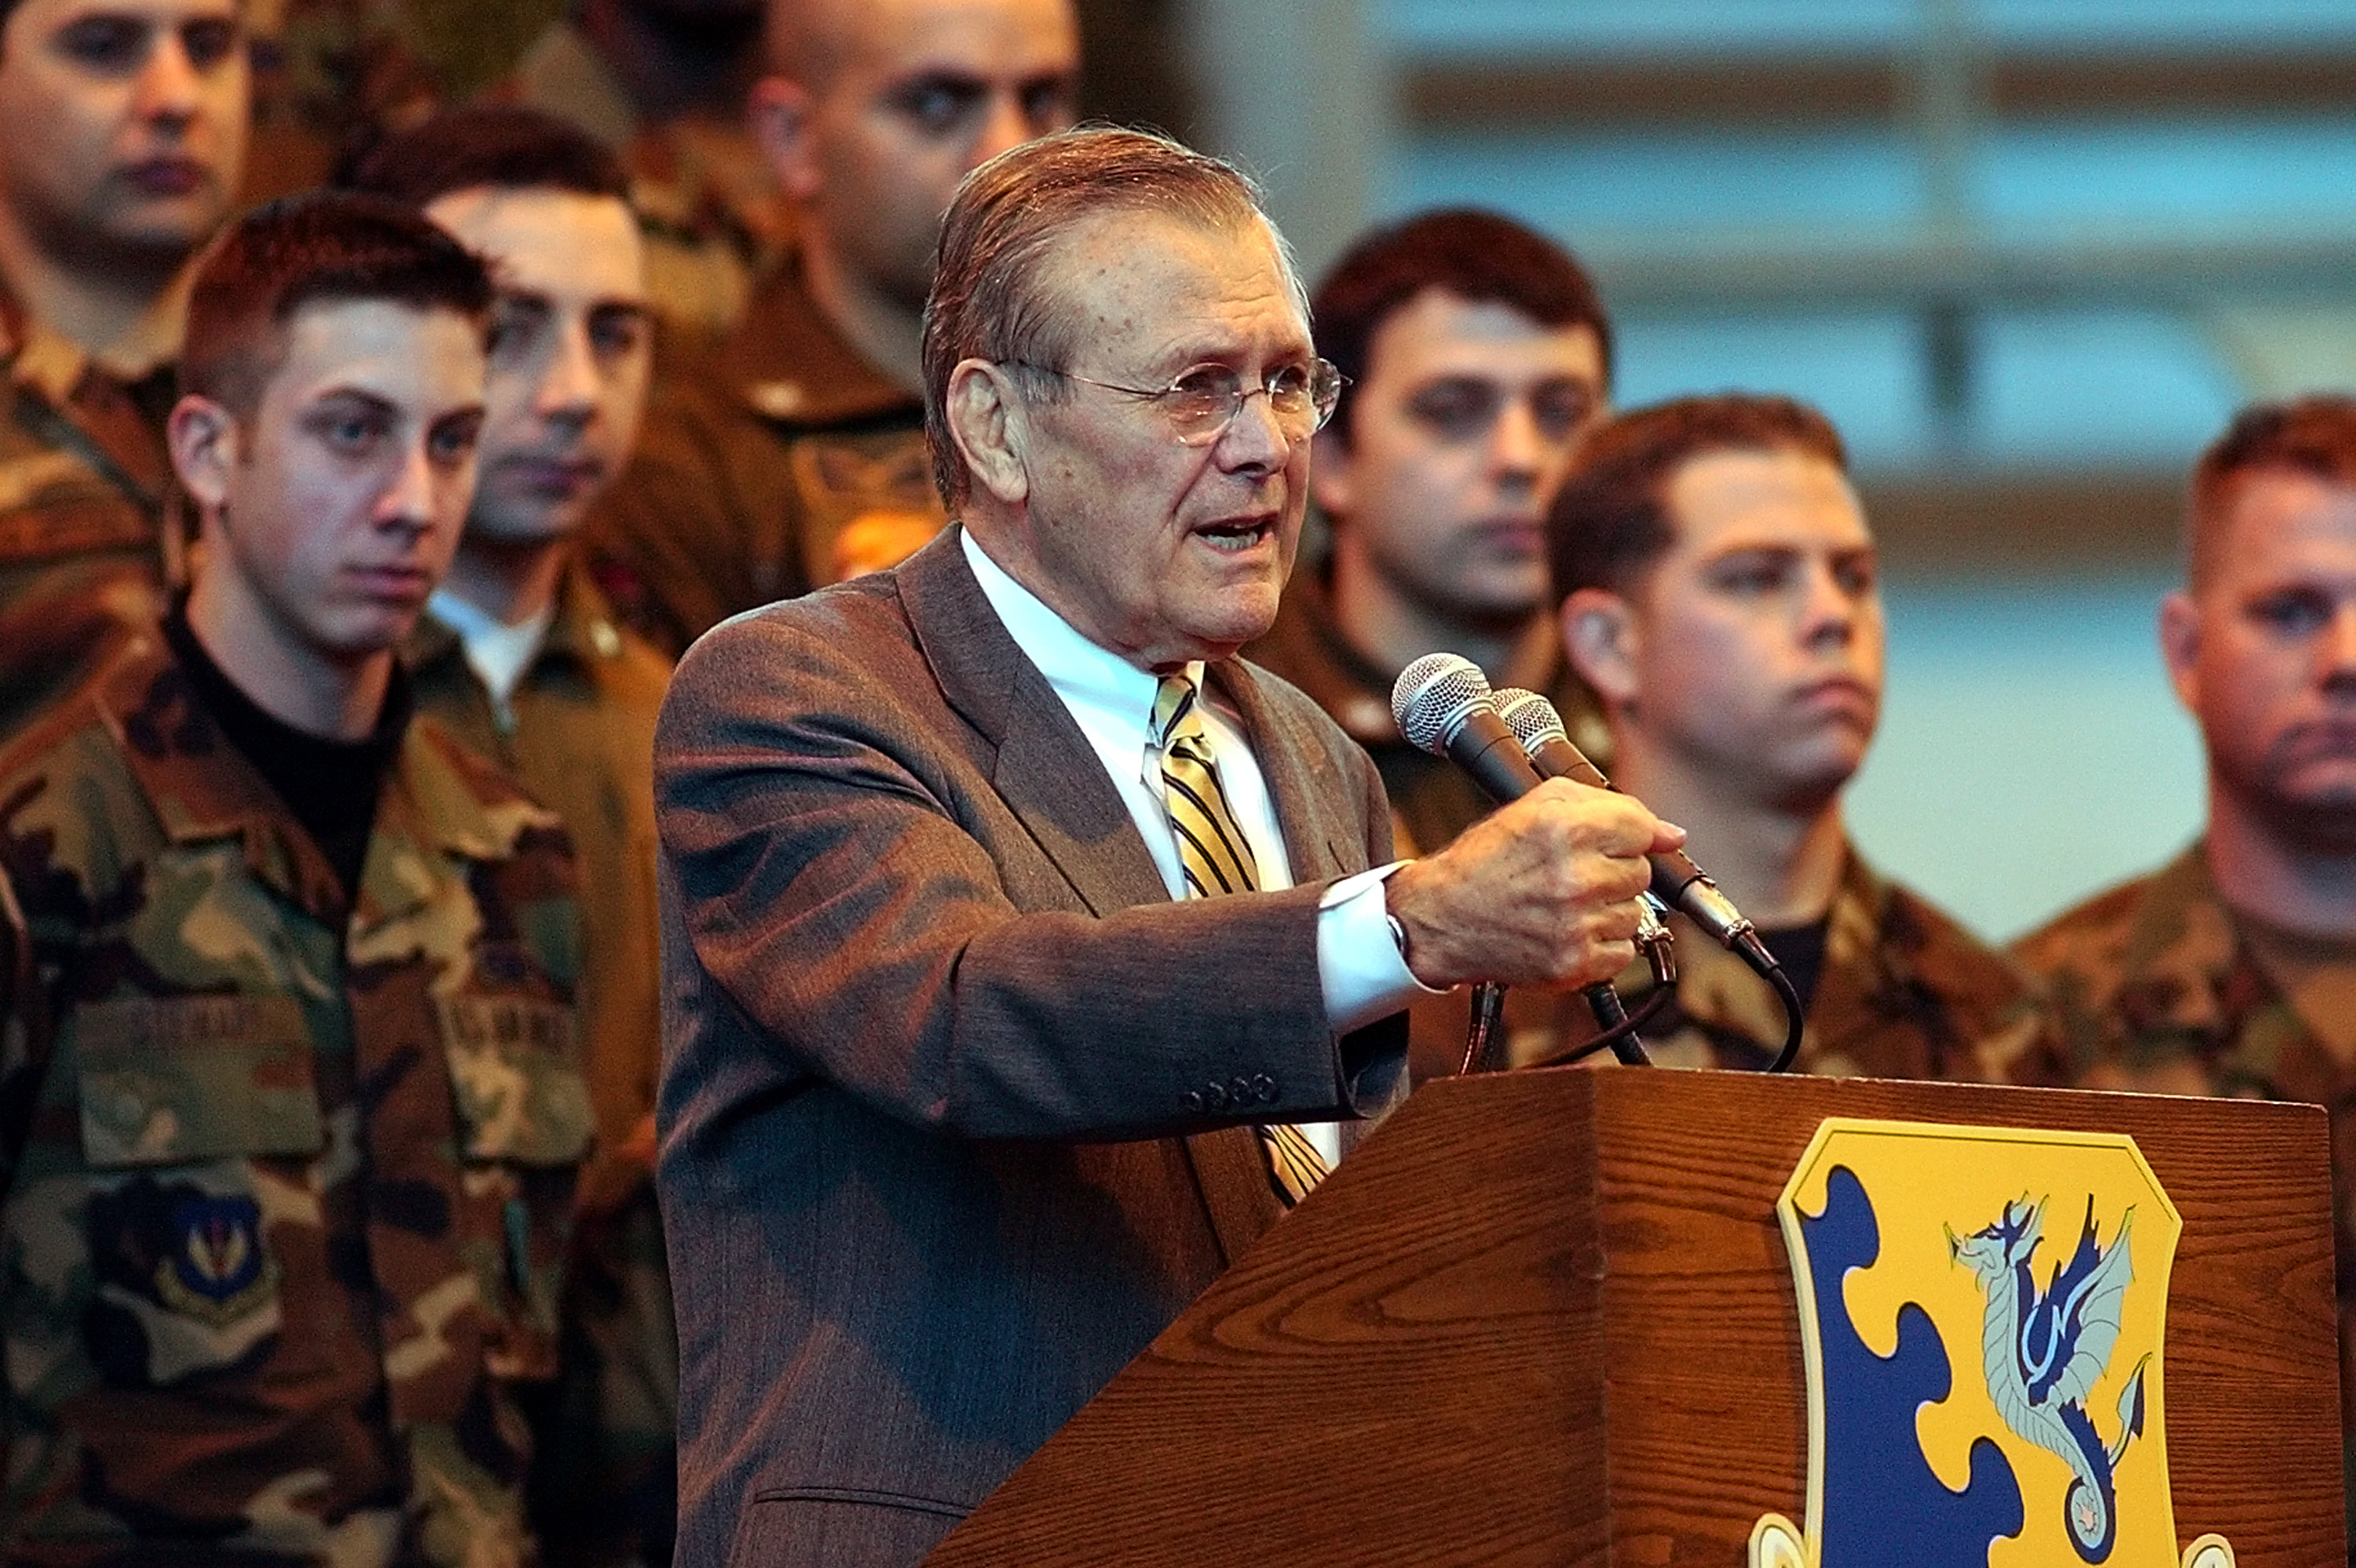 U.S. Defense Secretary Donald Rumsfeld speaks to troops in Italy. (Getty Images&mdash;Getty Images)